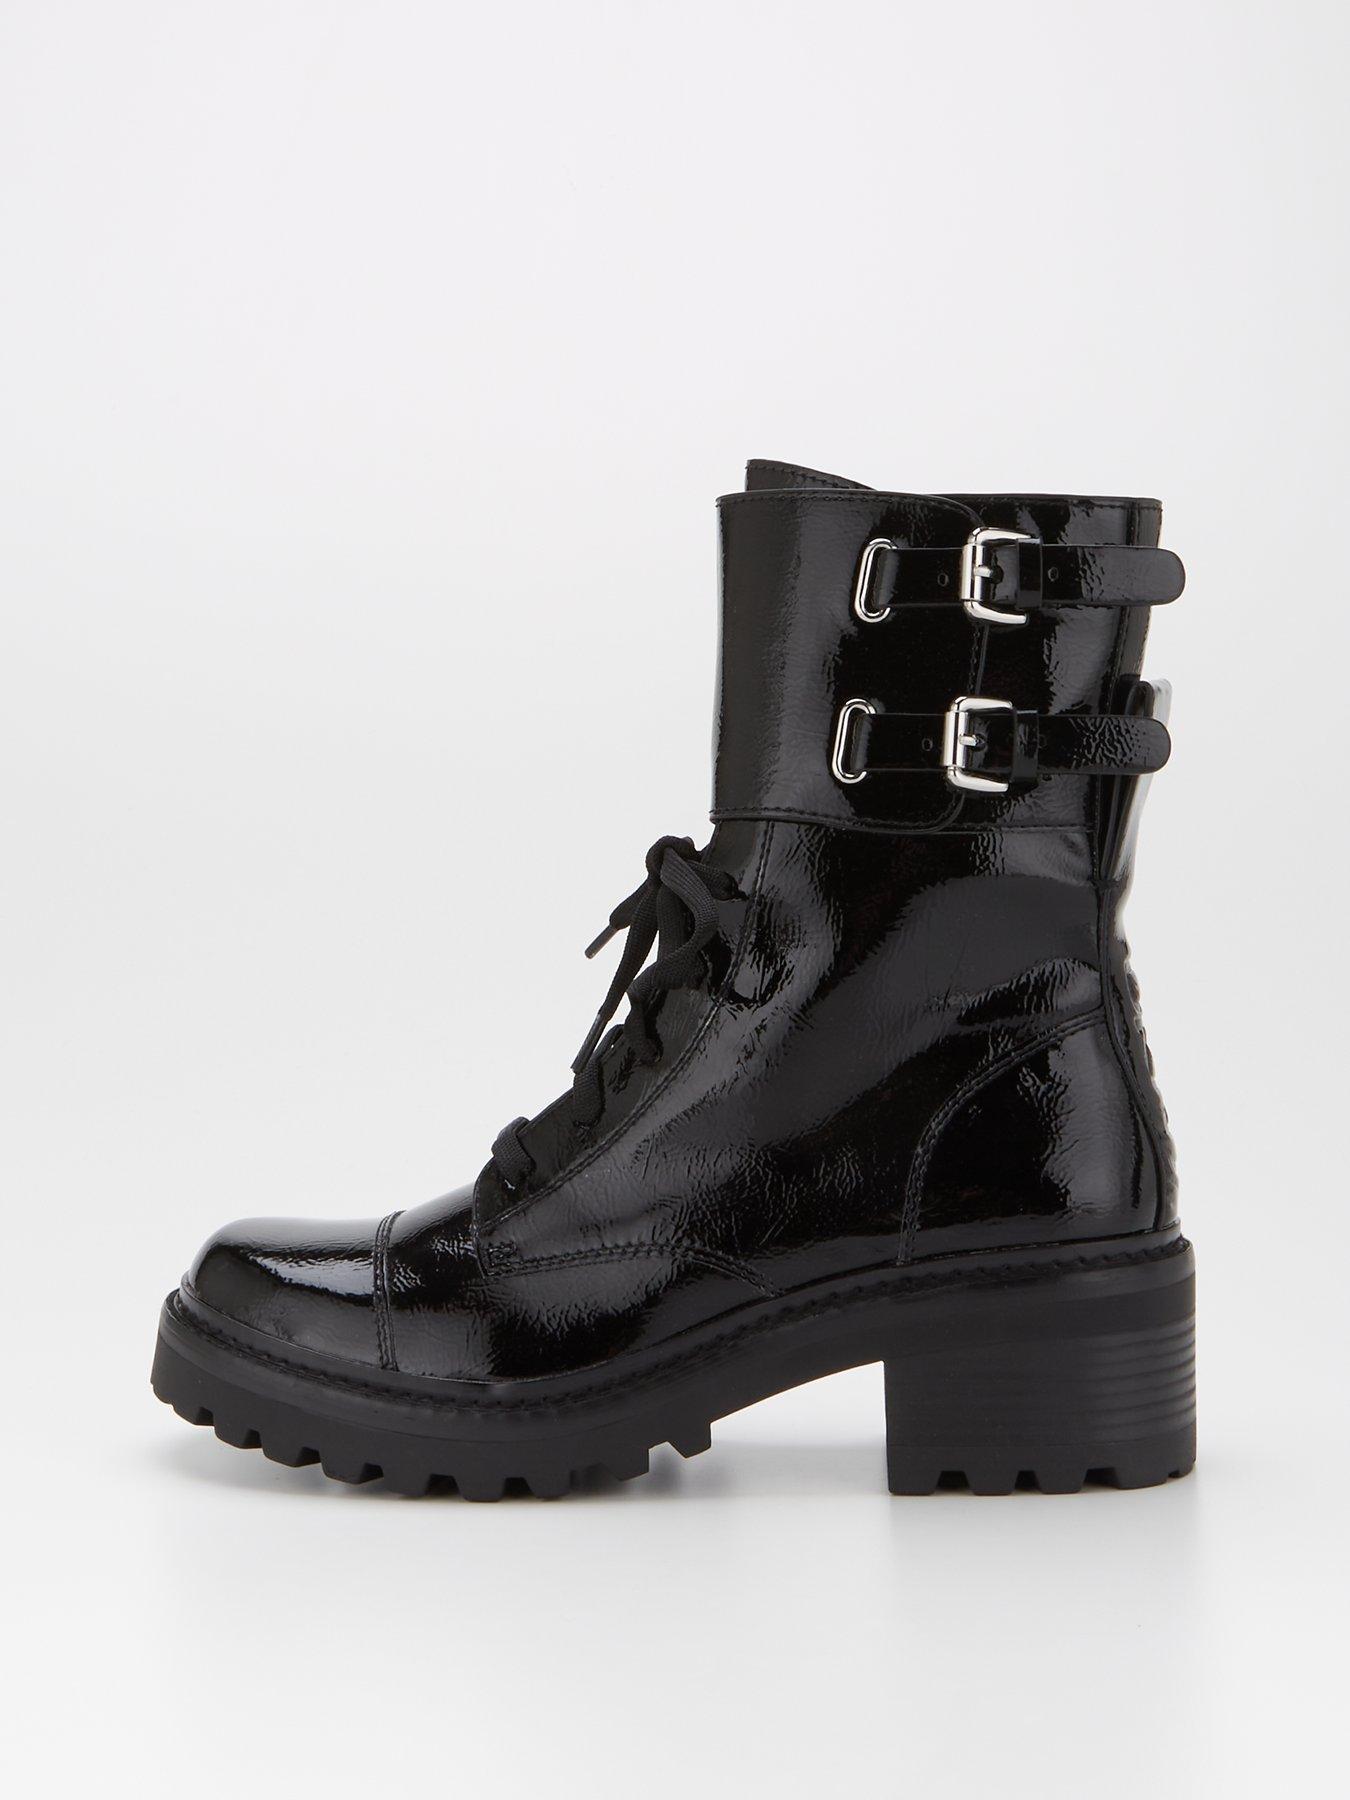 Shoes & boots Bart Lace-Up Buckle Combat Boots - Black